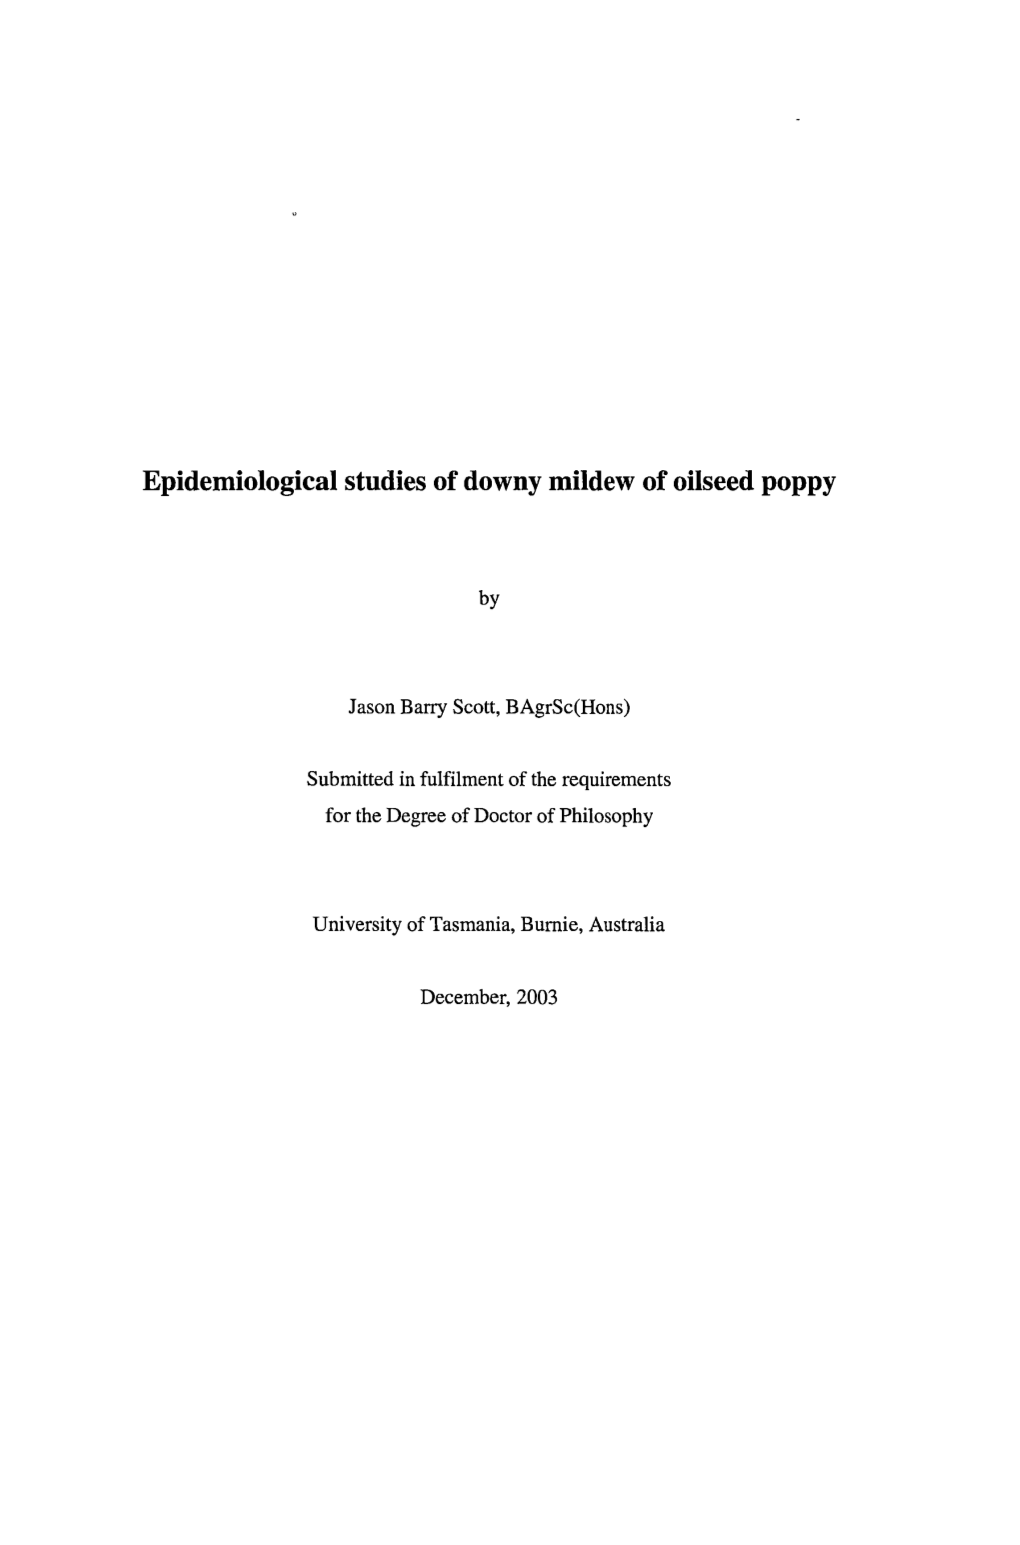 Epidemiological Studies of Downy Mildew of Oilseed Poppy